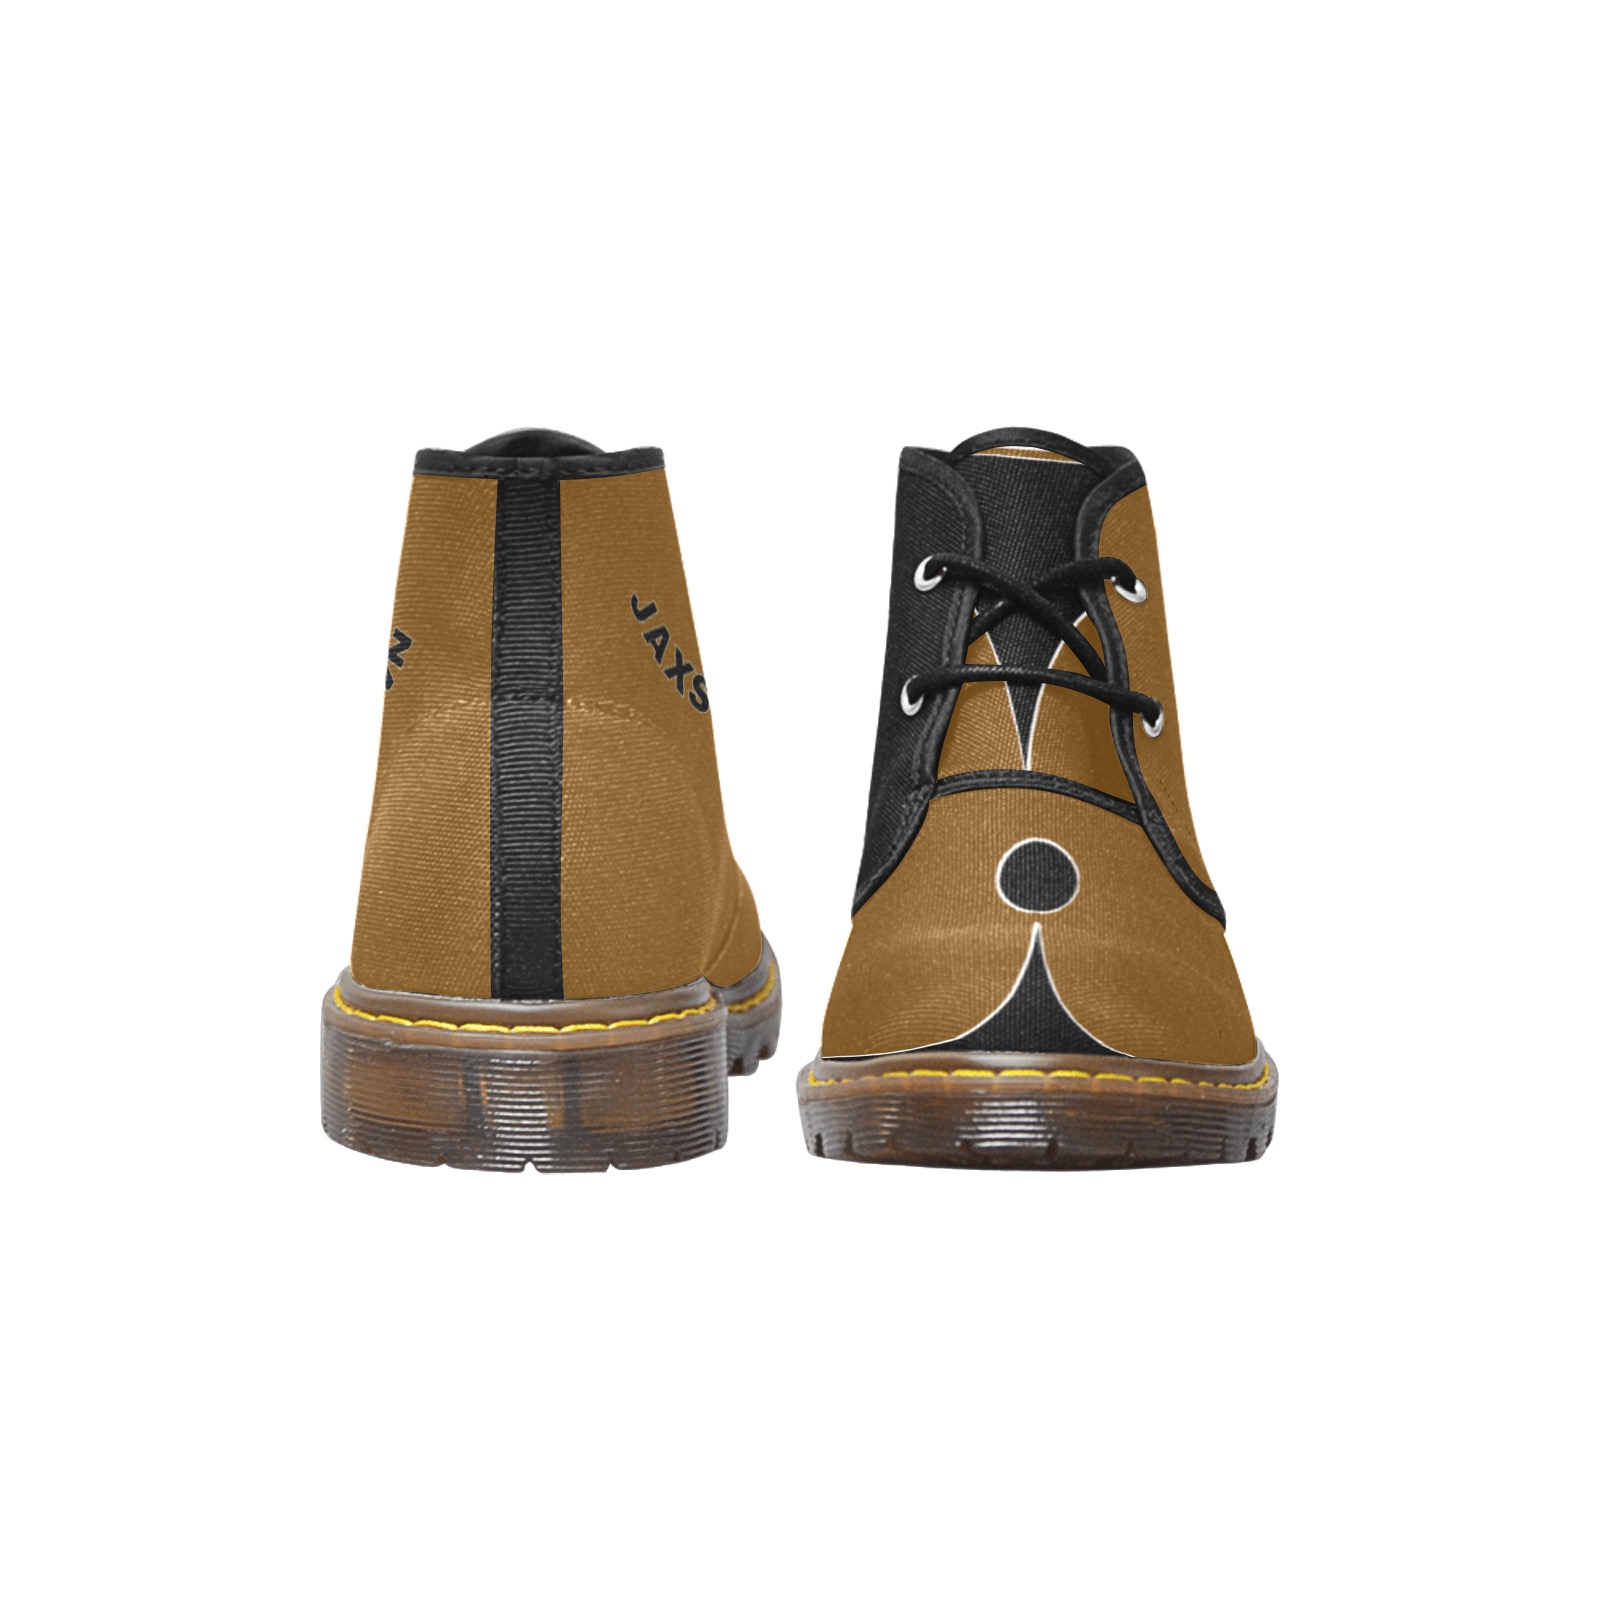 jaxs & crown  print Men's Canvas Chukka Boots (Model 2402-1)